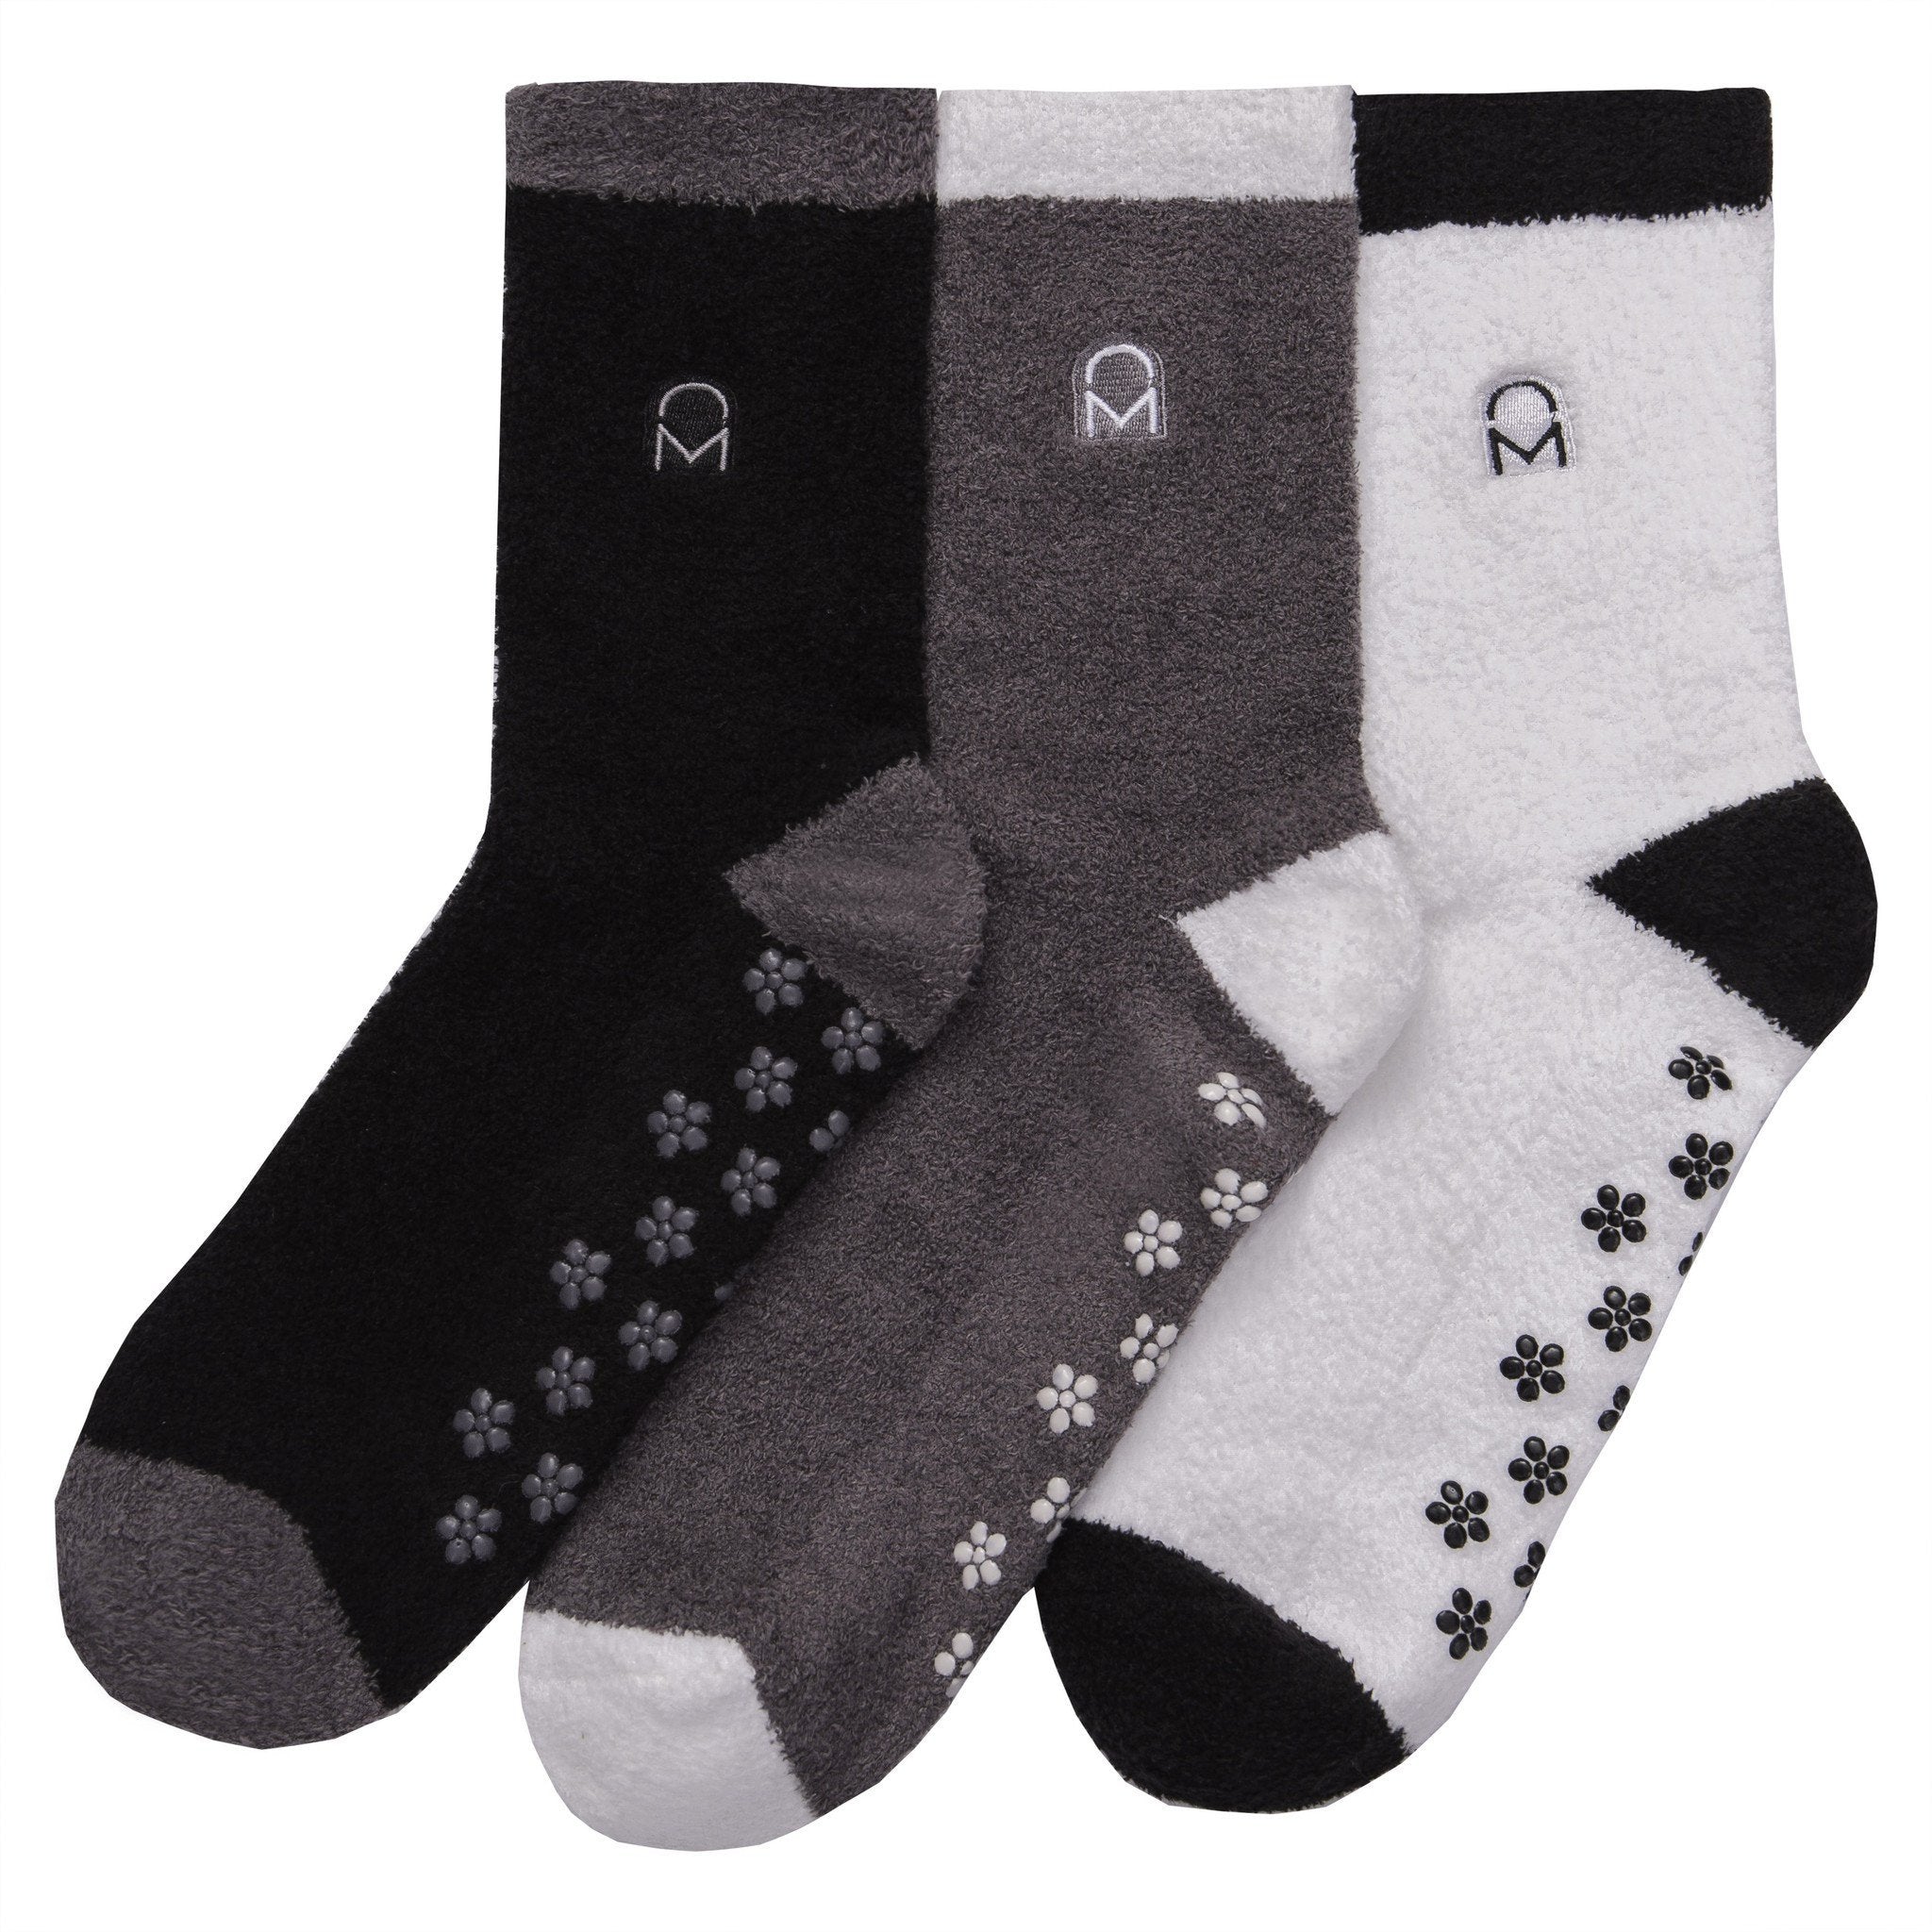 Women's Soft Anti-Skid Micro-Plush Winter Crew Socks - Set C3